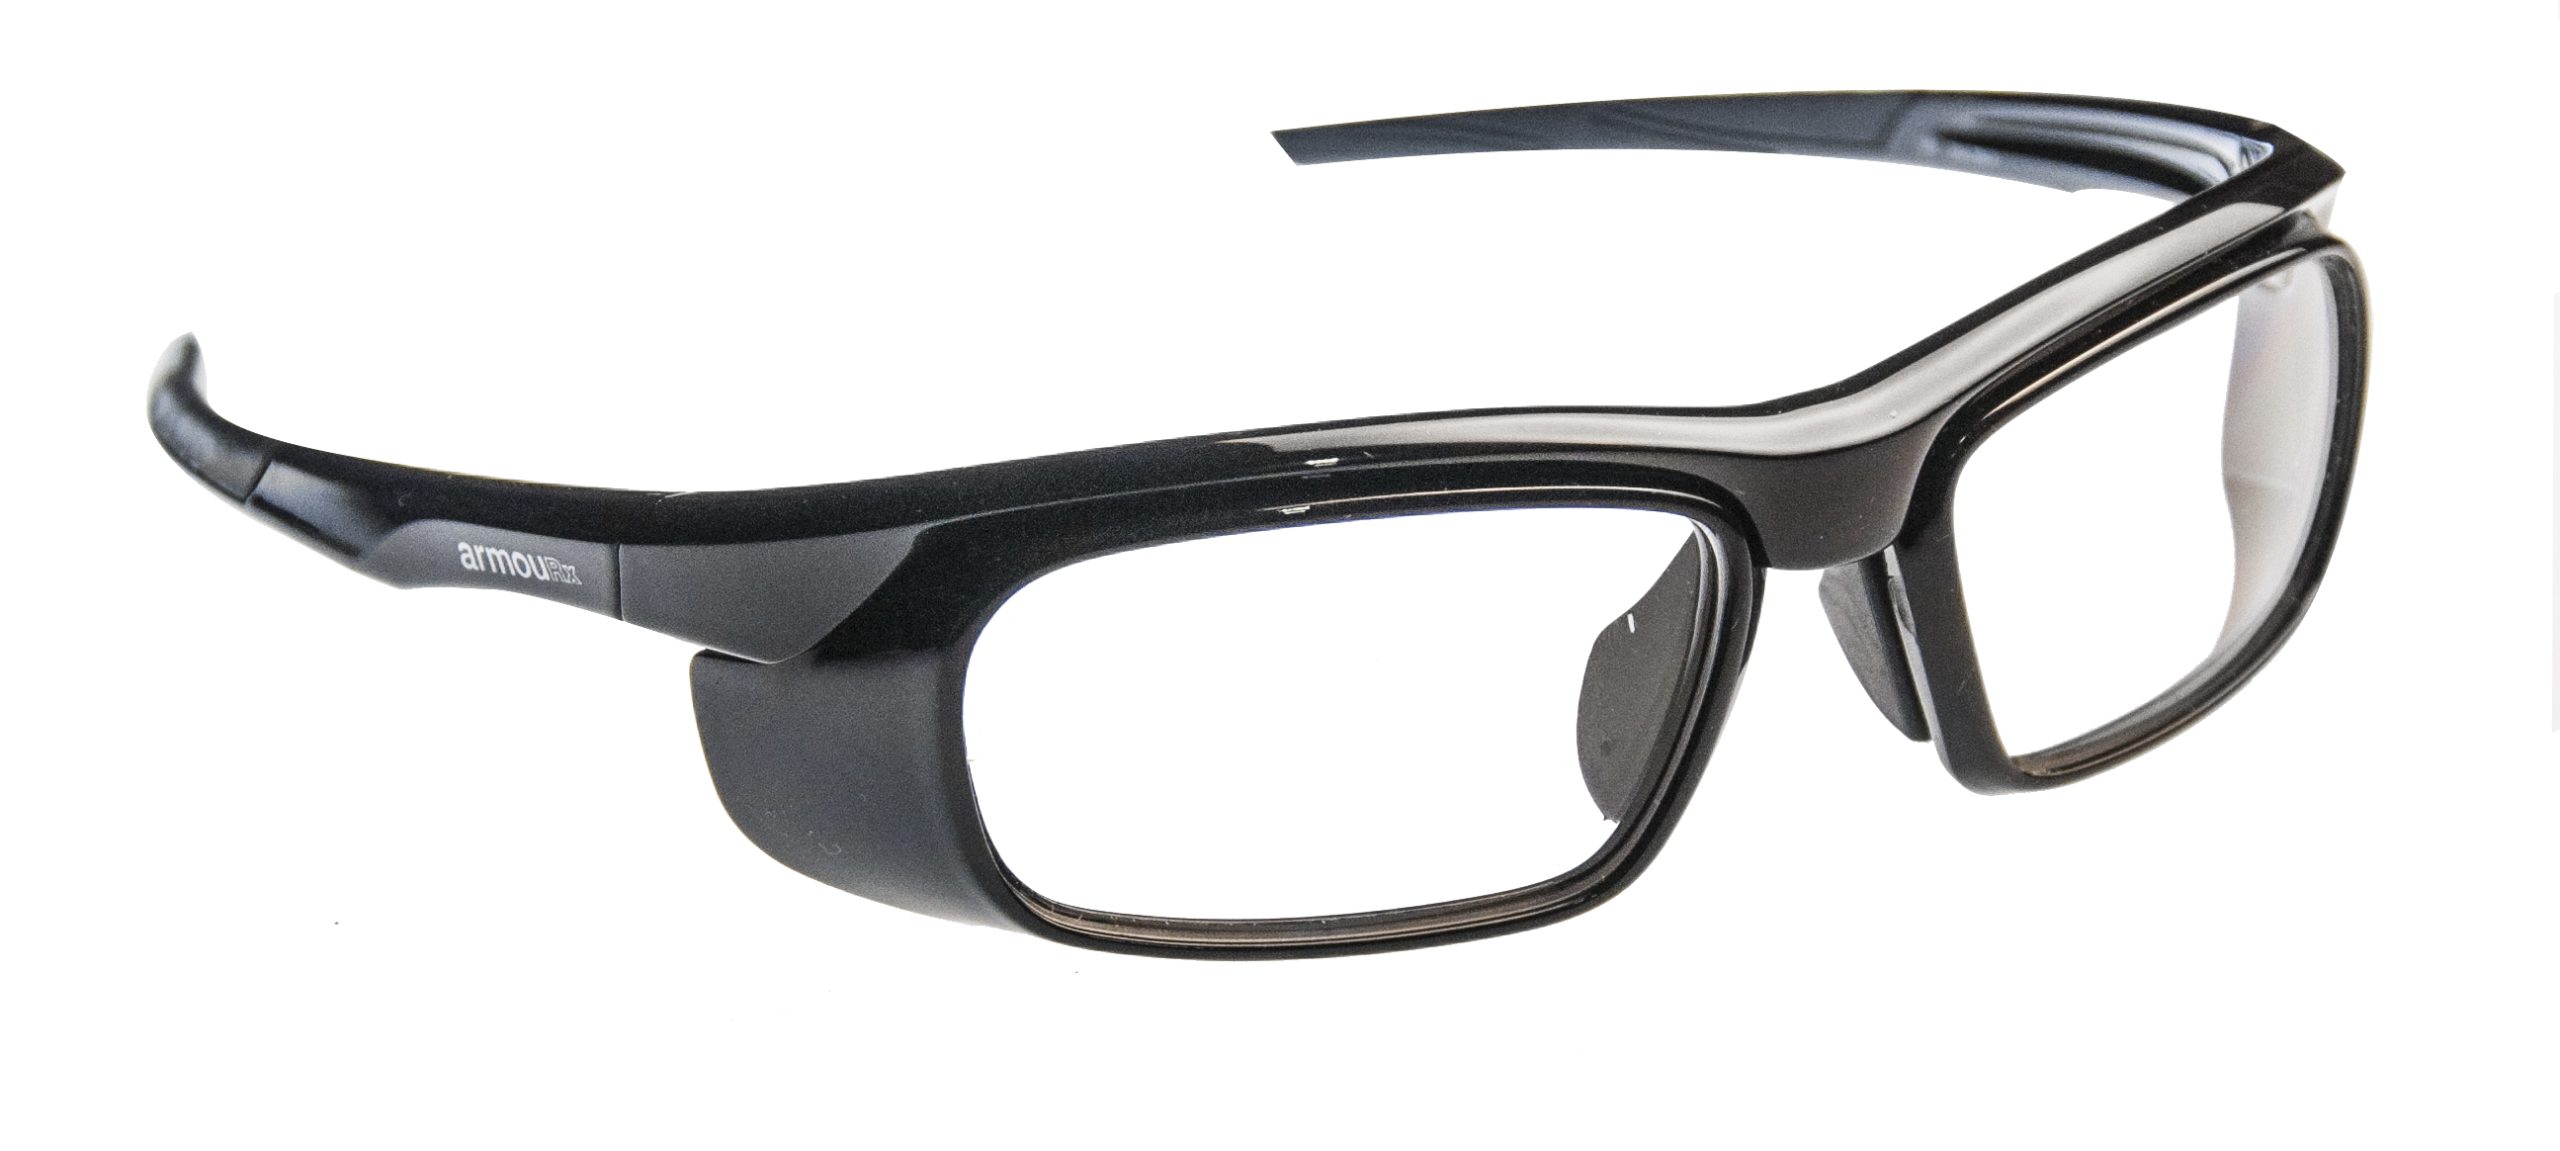 Safety Prescription Glasses ArmouRx 6005 Single Vision 